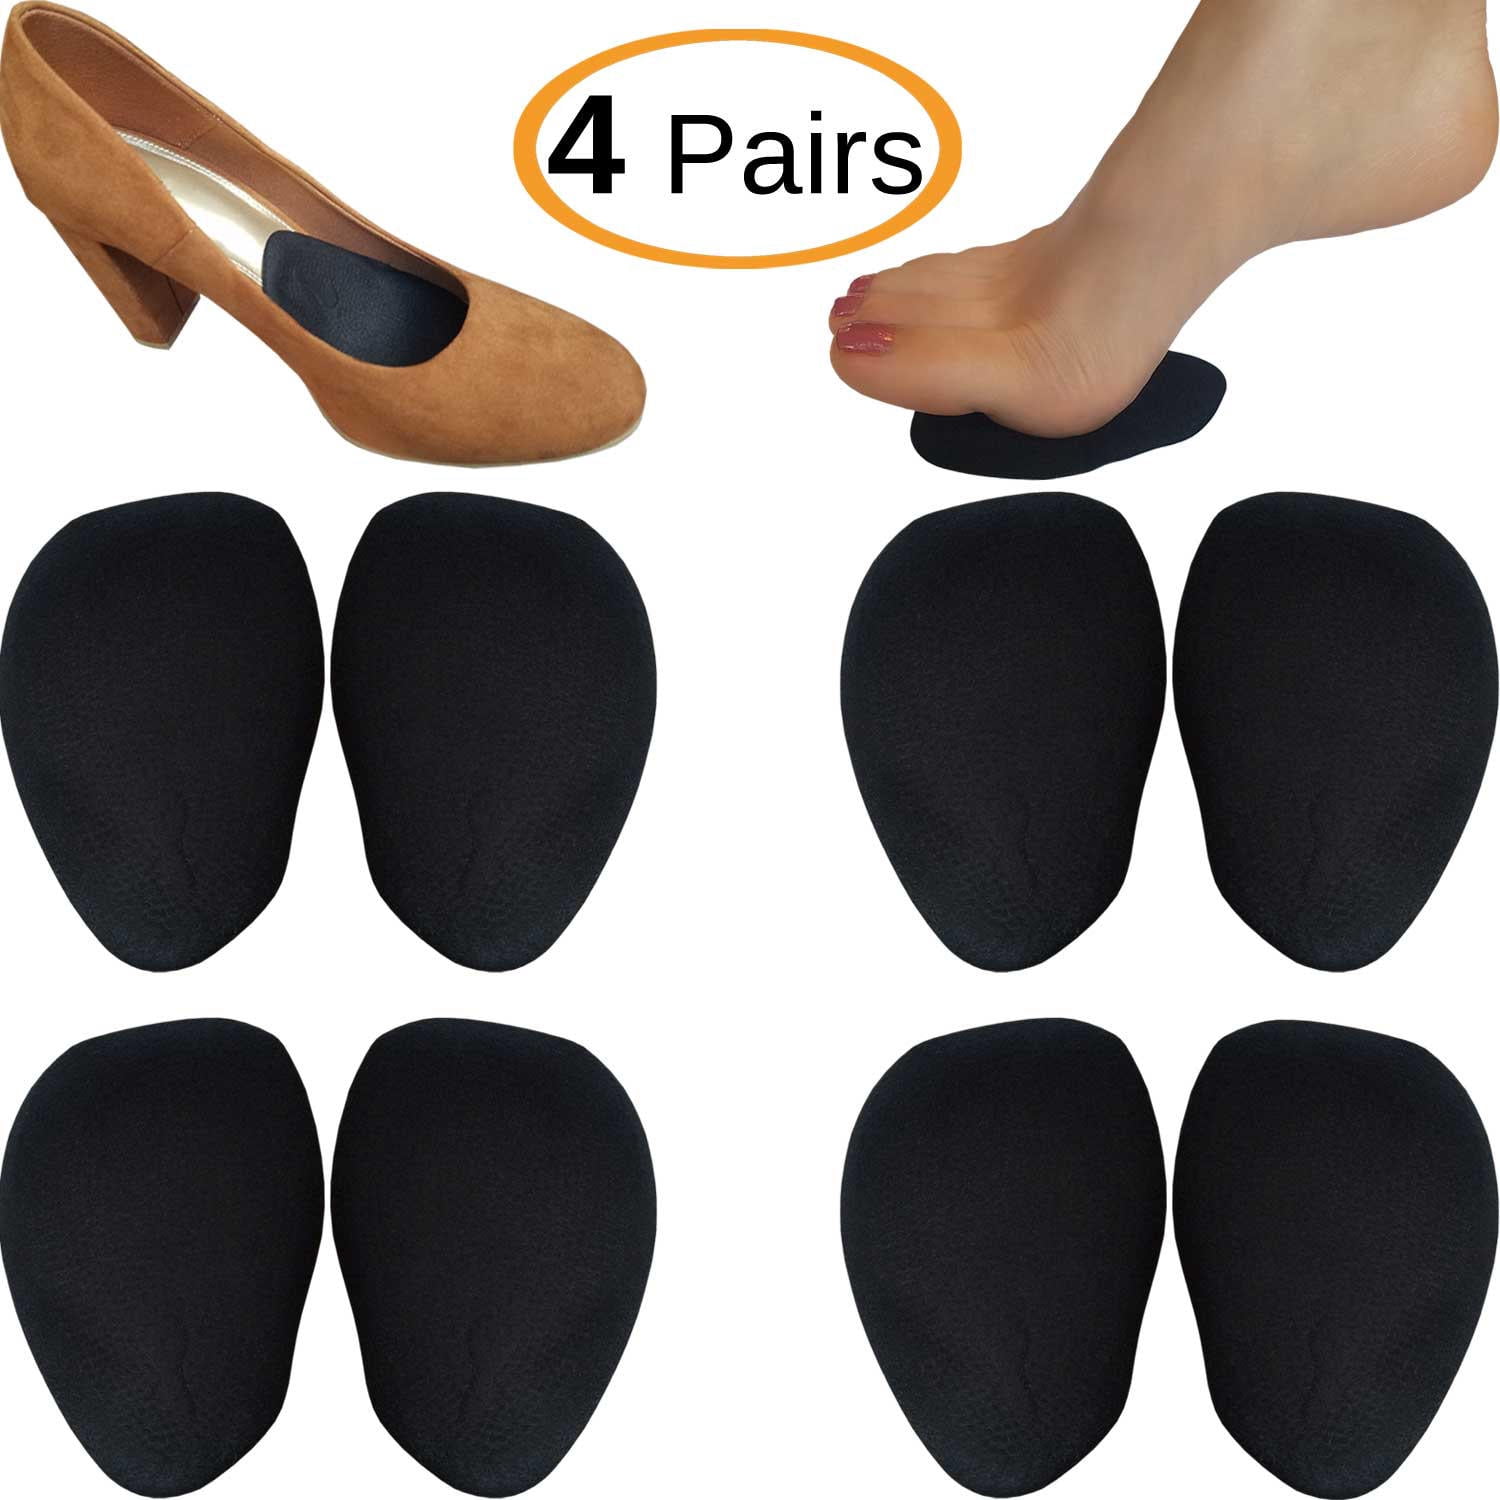 S Women Forefoot Cushion Half Insoles Anti-Slip High Heel Shoe Pads Inserts 